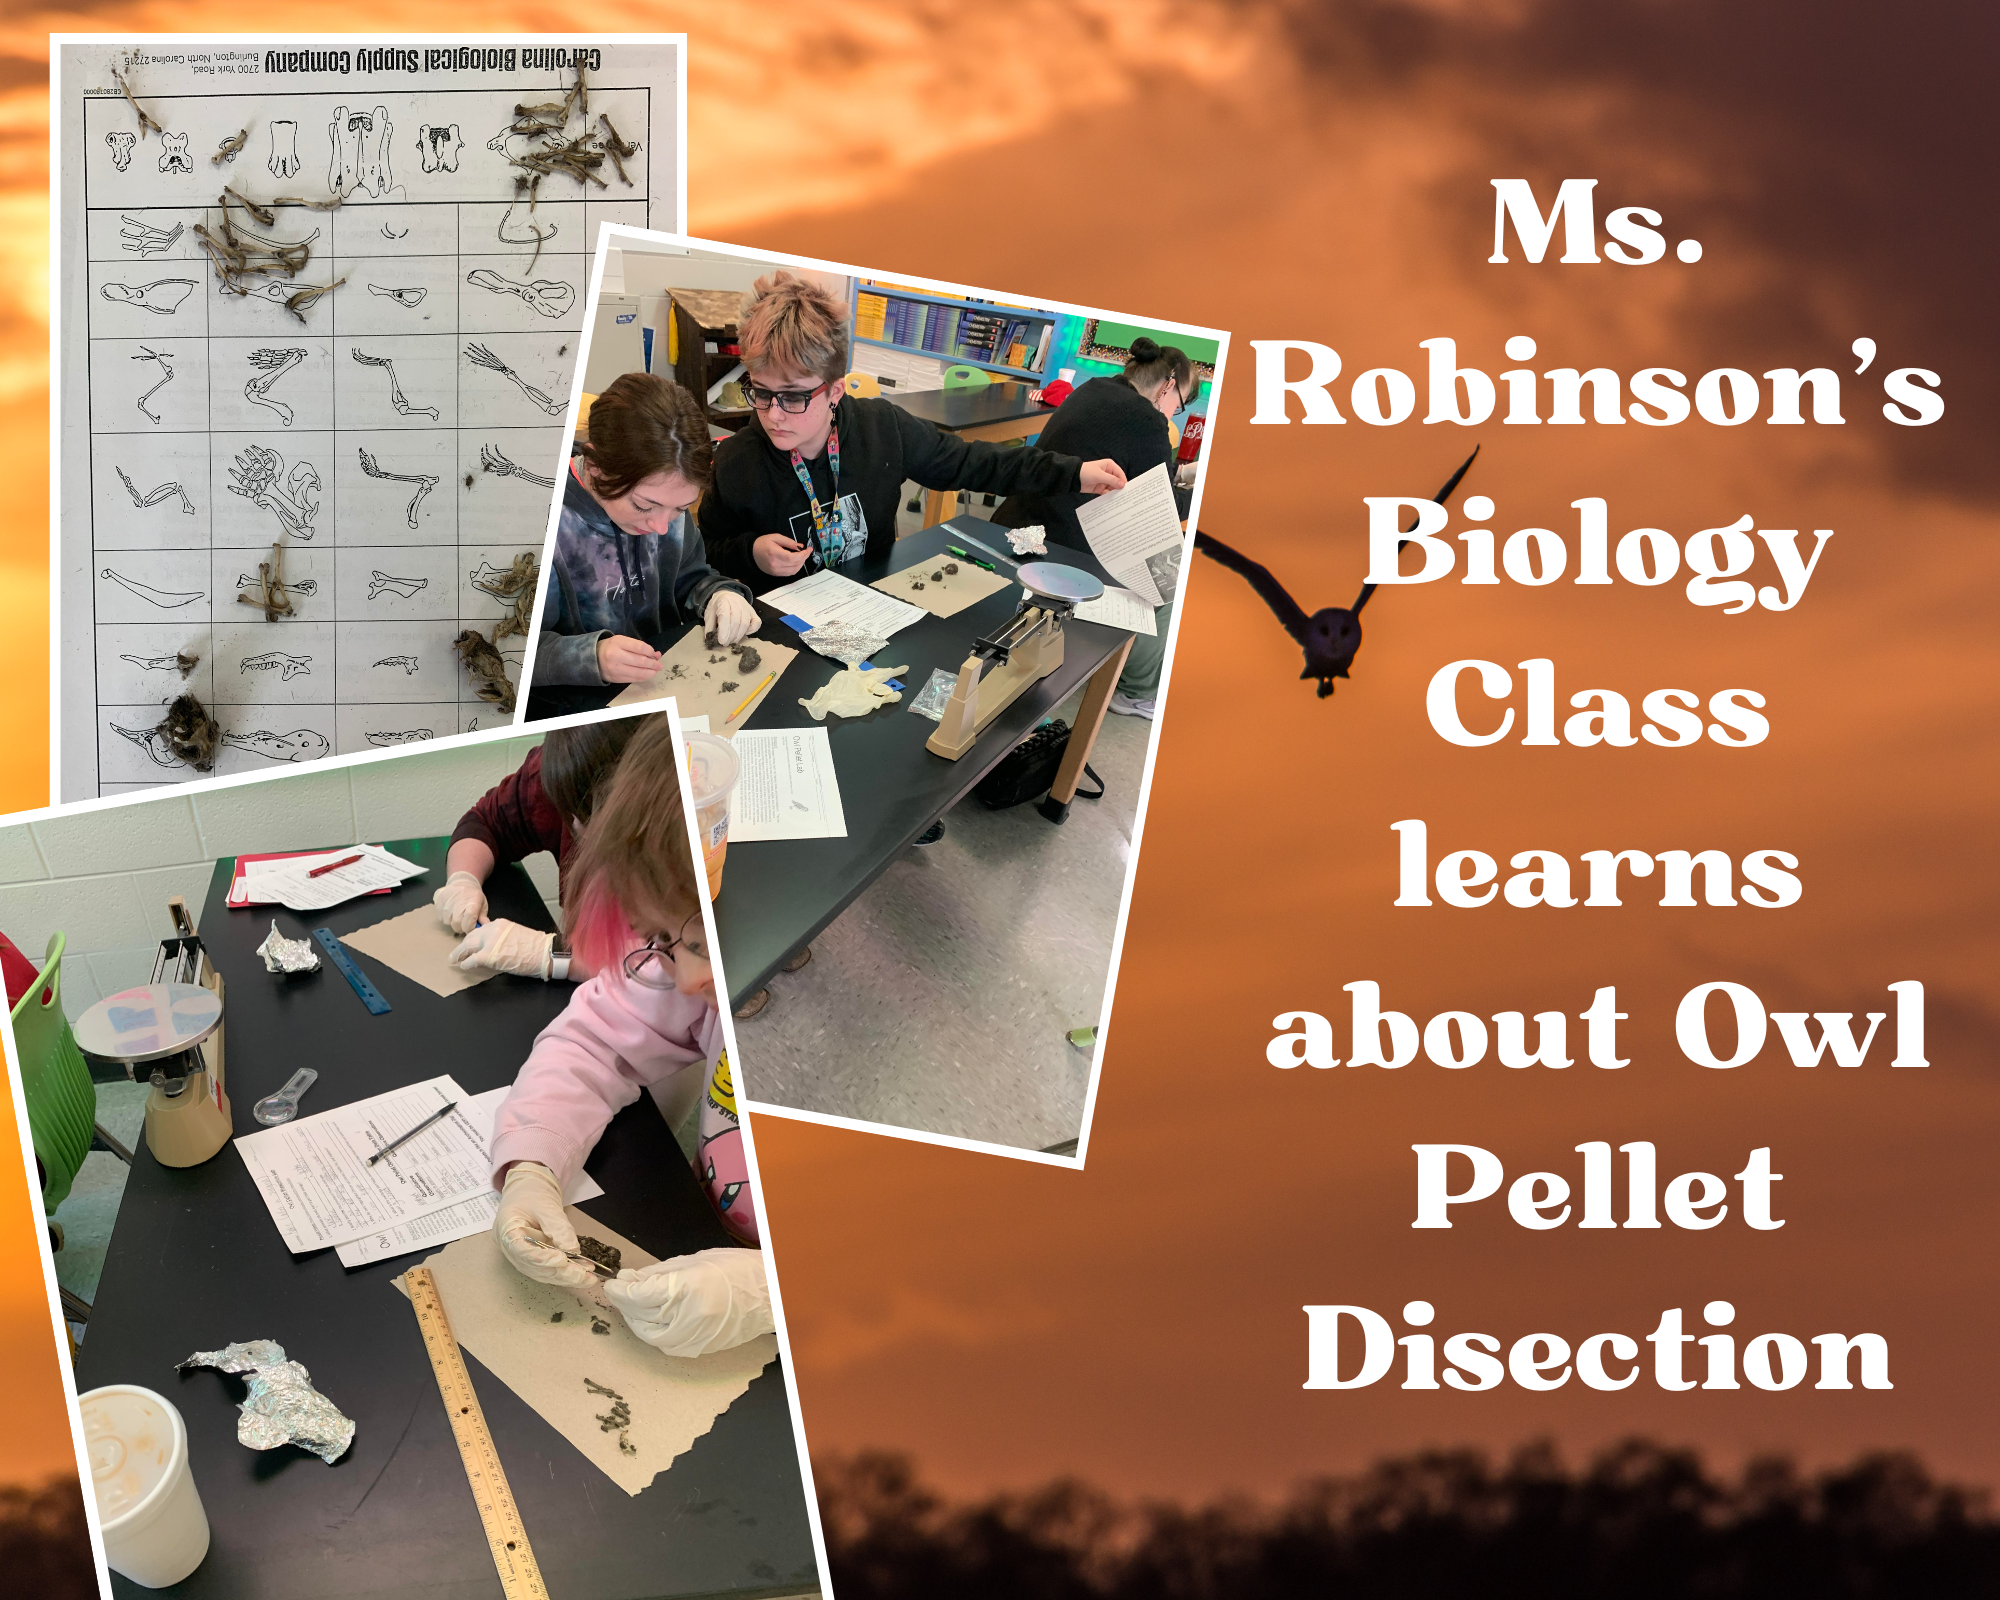 Biology classes investigate owl pellet disection.